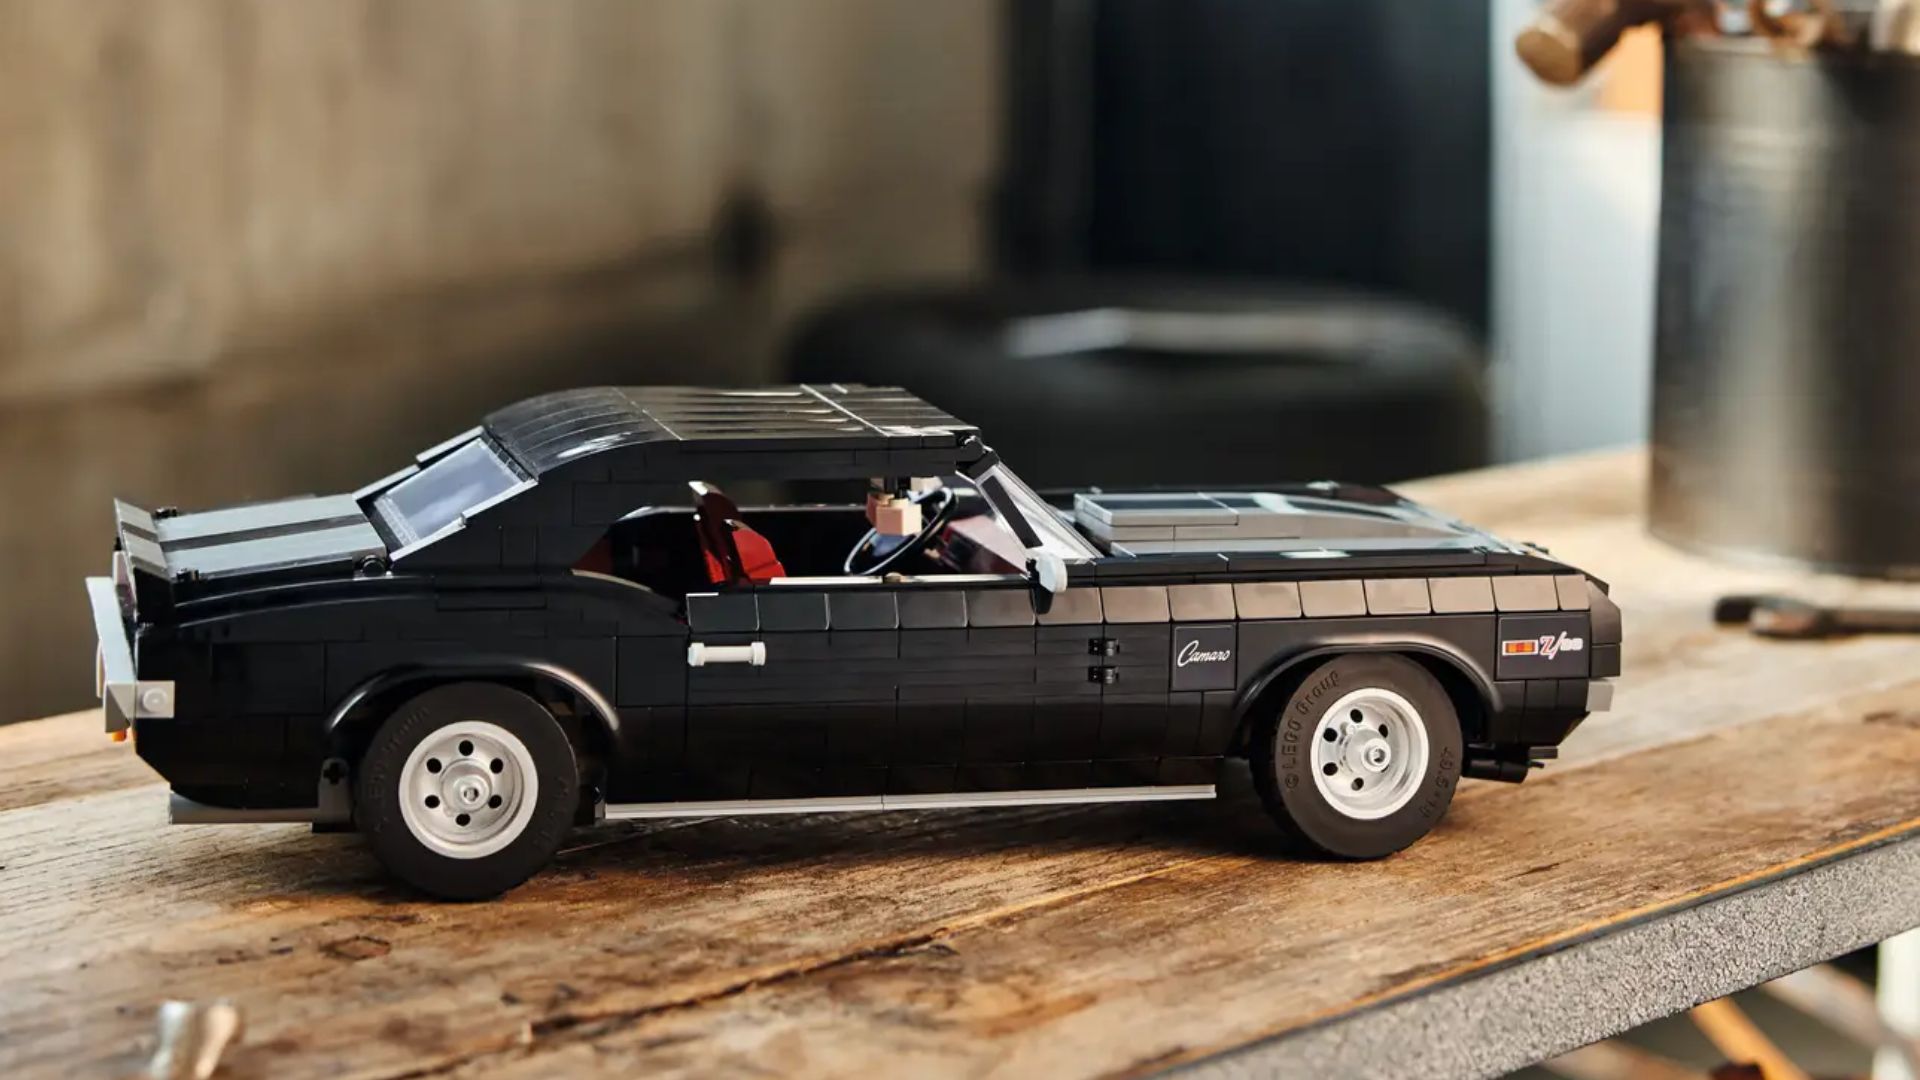 Chevrolet Camaro gets the Lego treatment